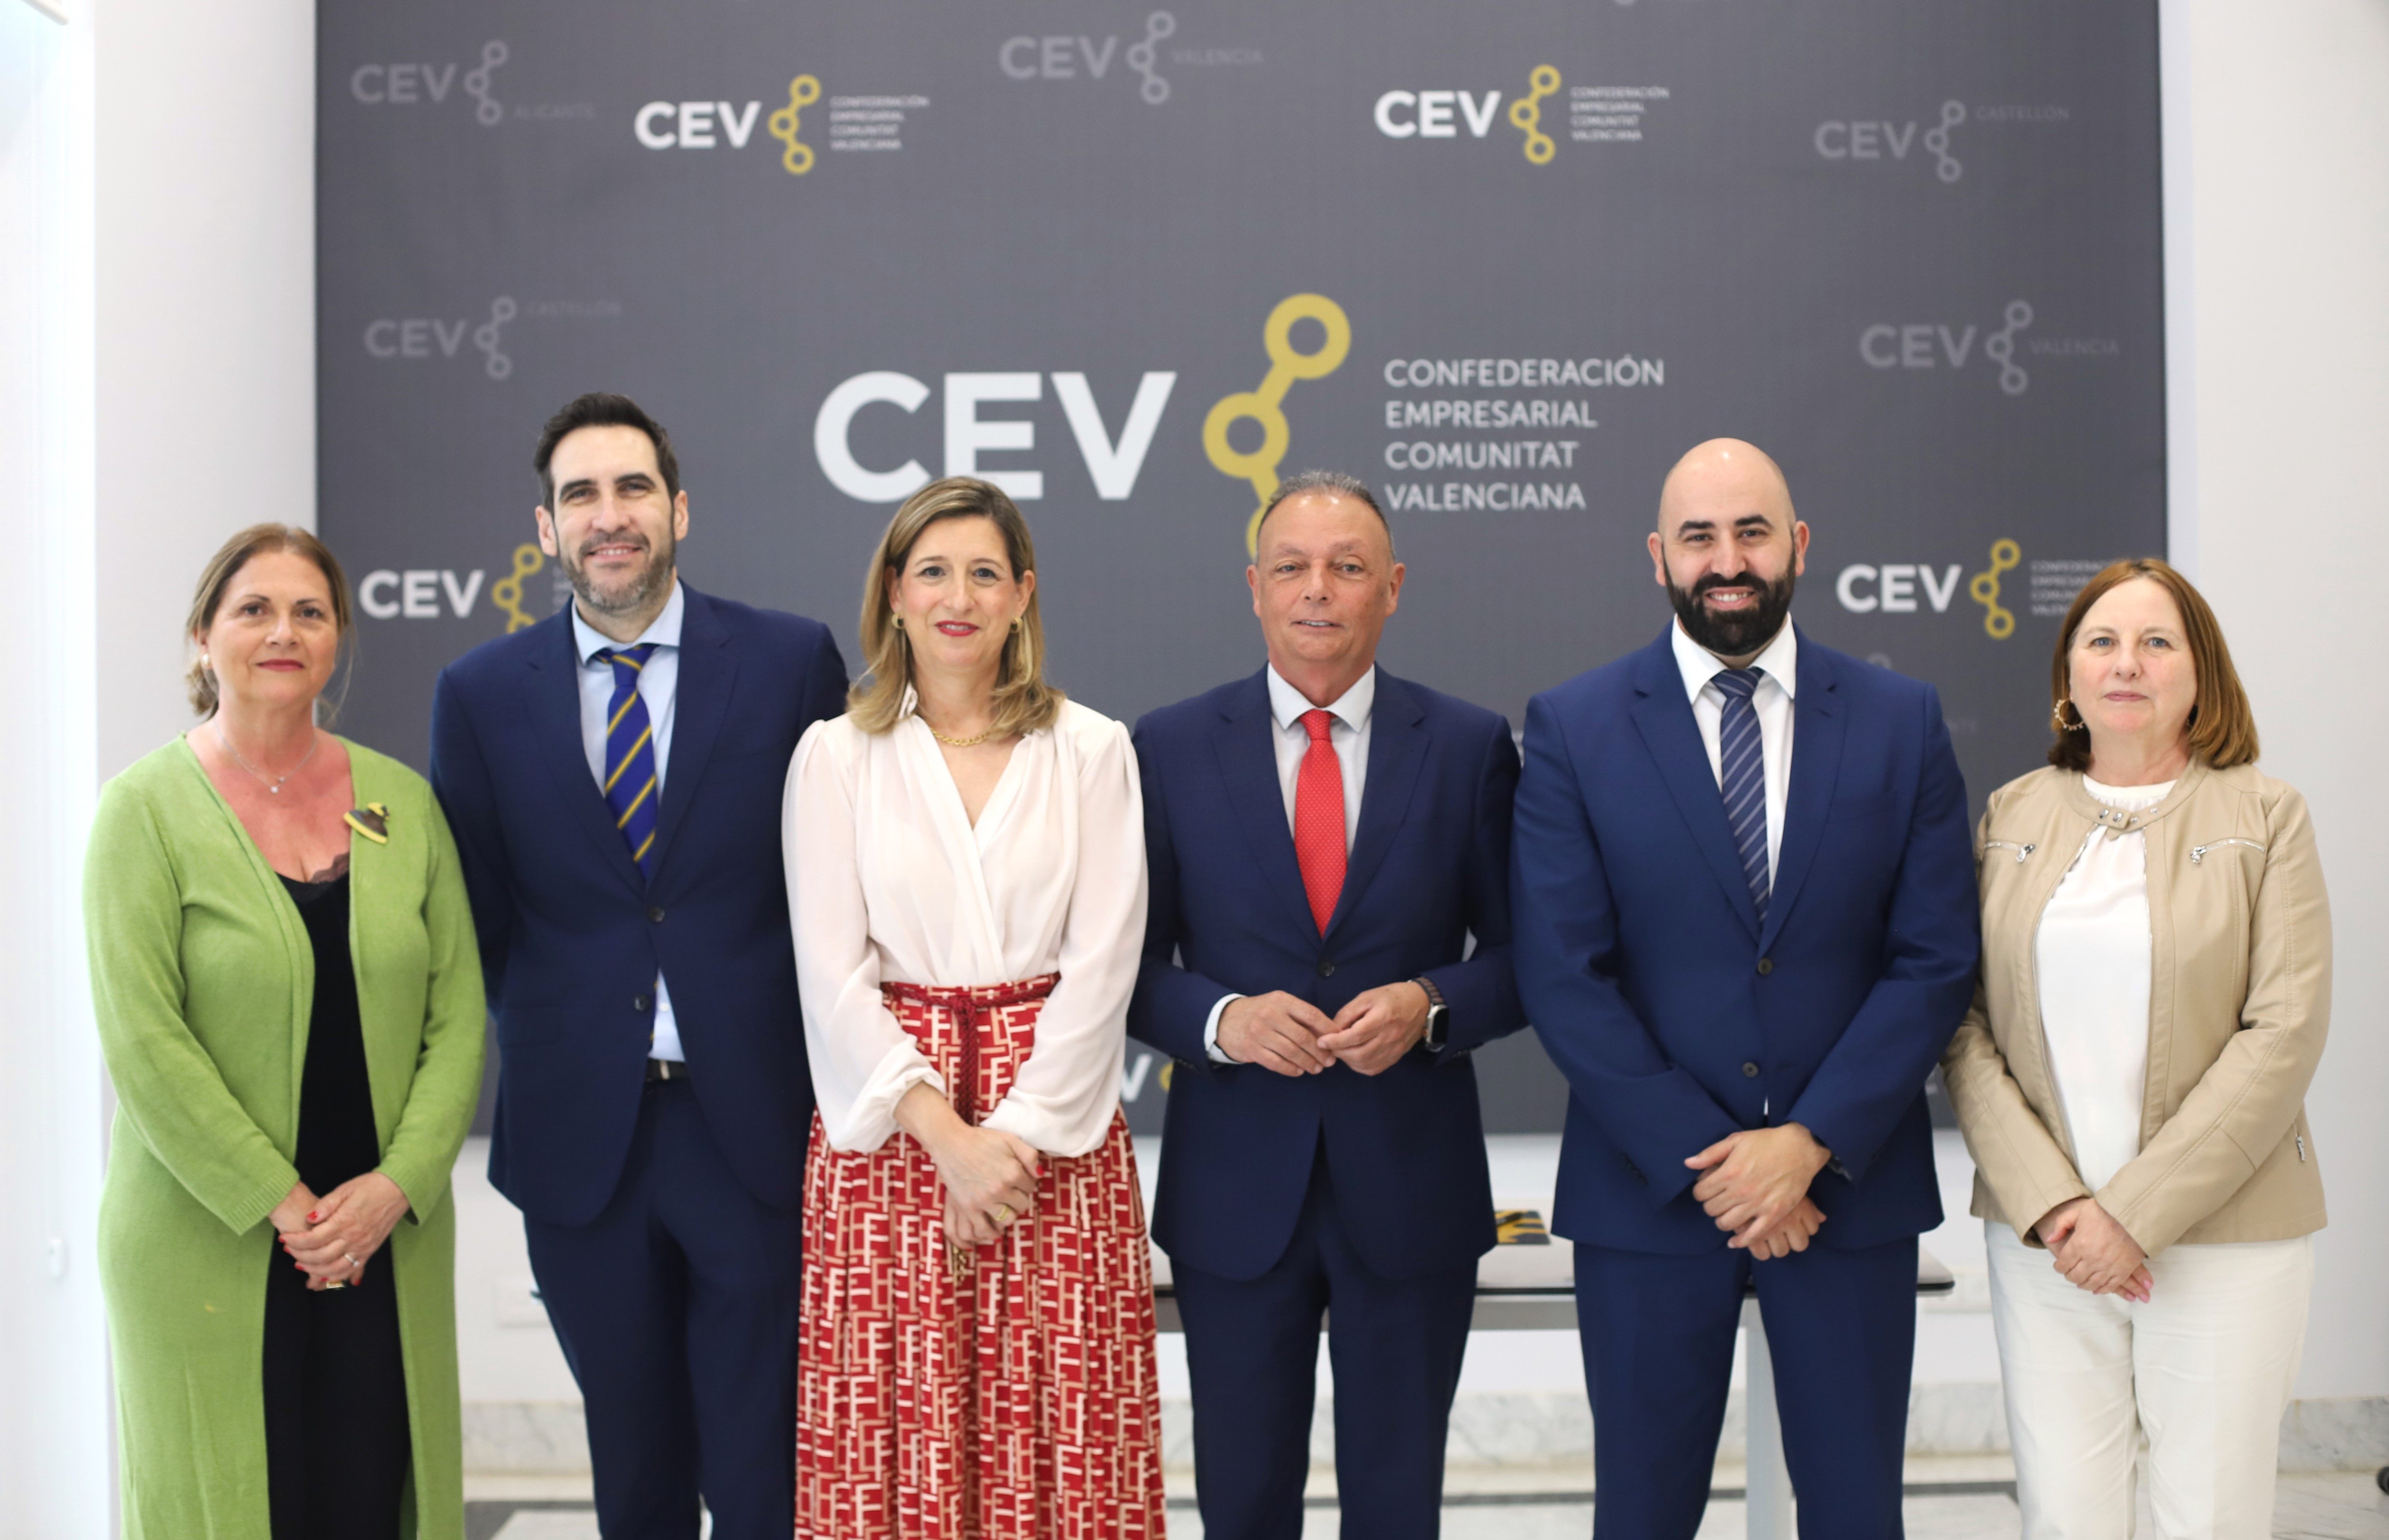 Convenio VIU-CEV firma foto grupal autoridades